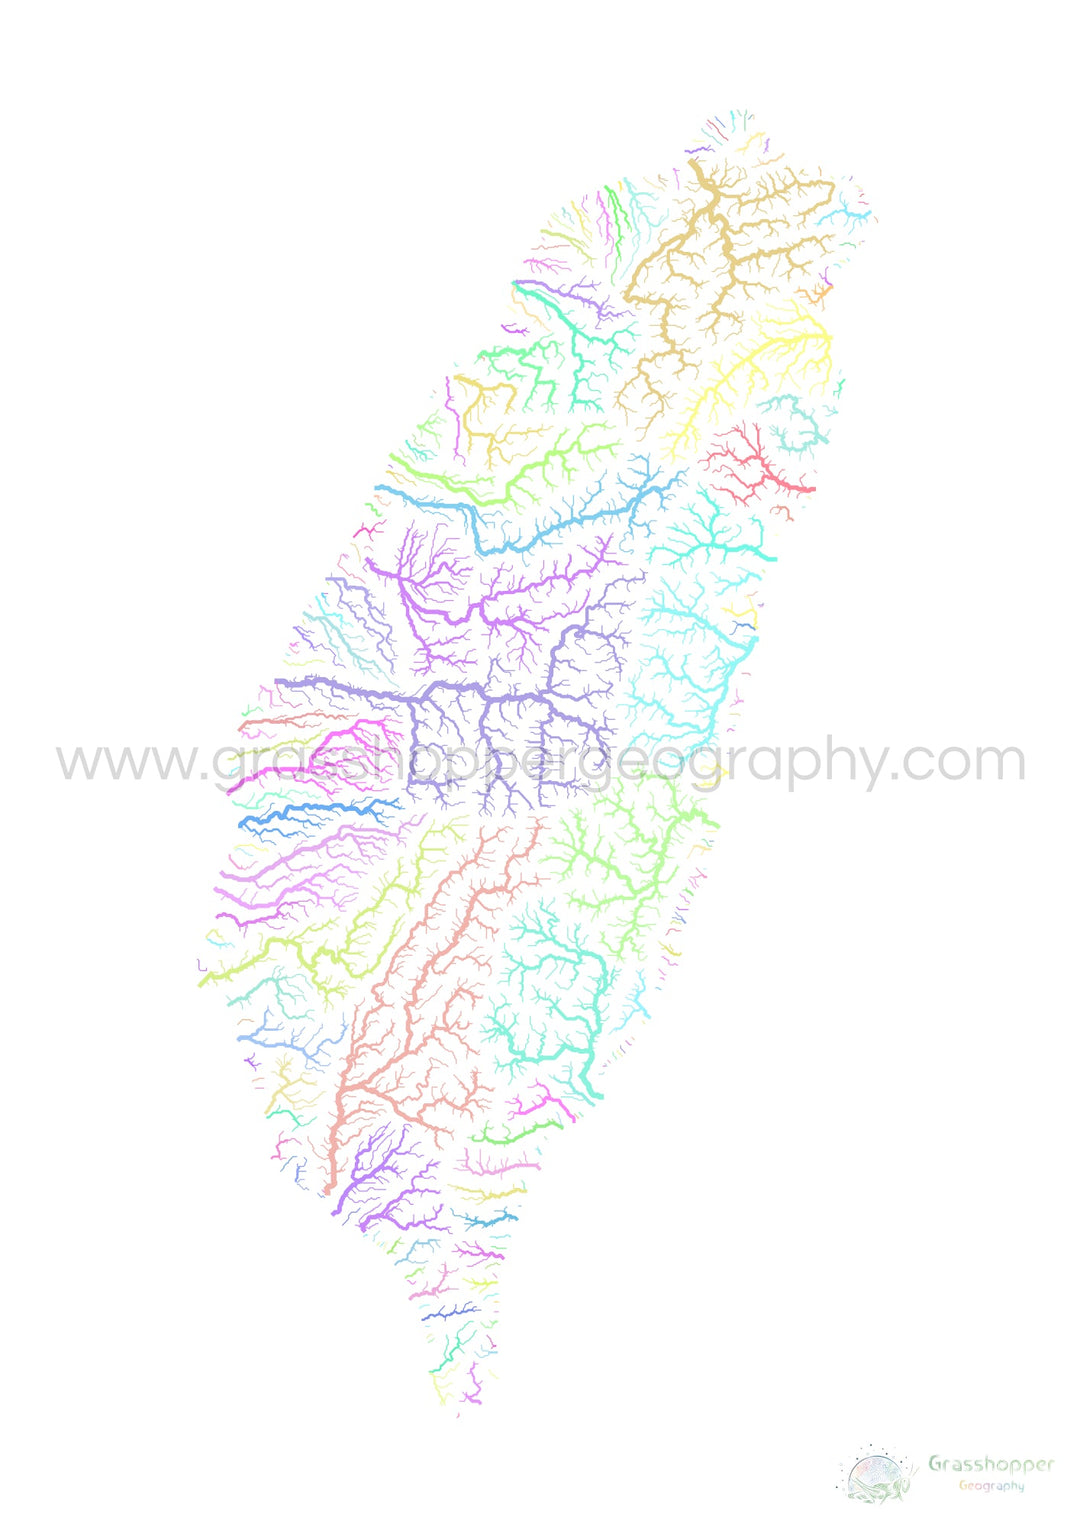 Taiwan - River basin map, pastel on white - Fine Art Print